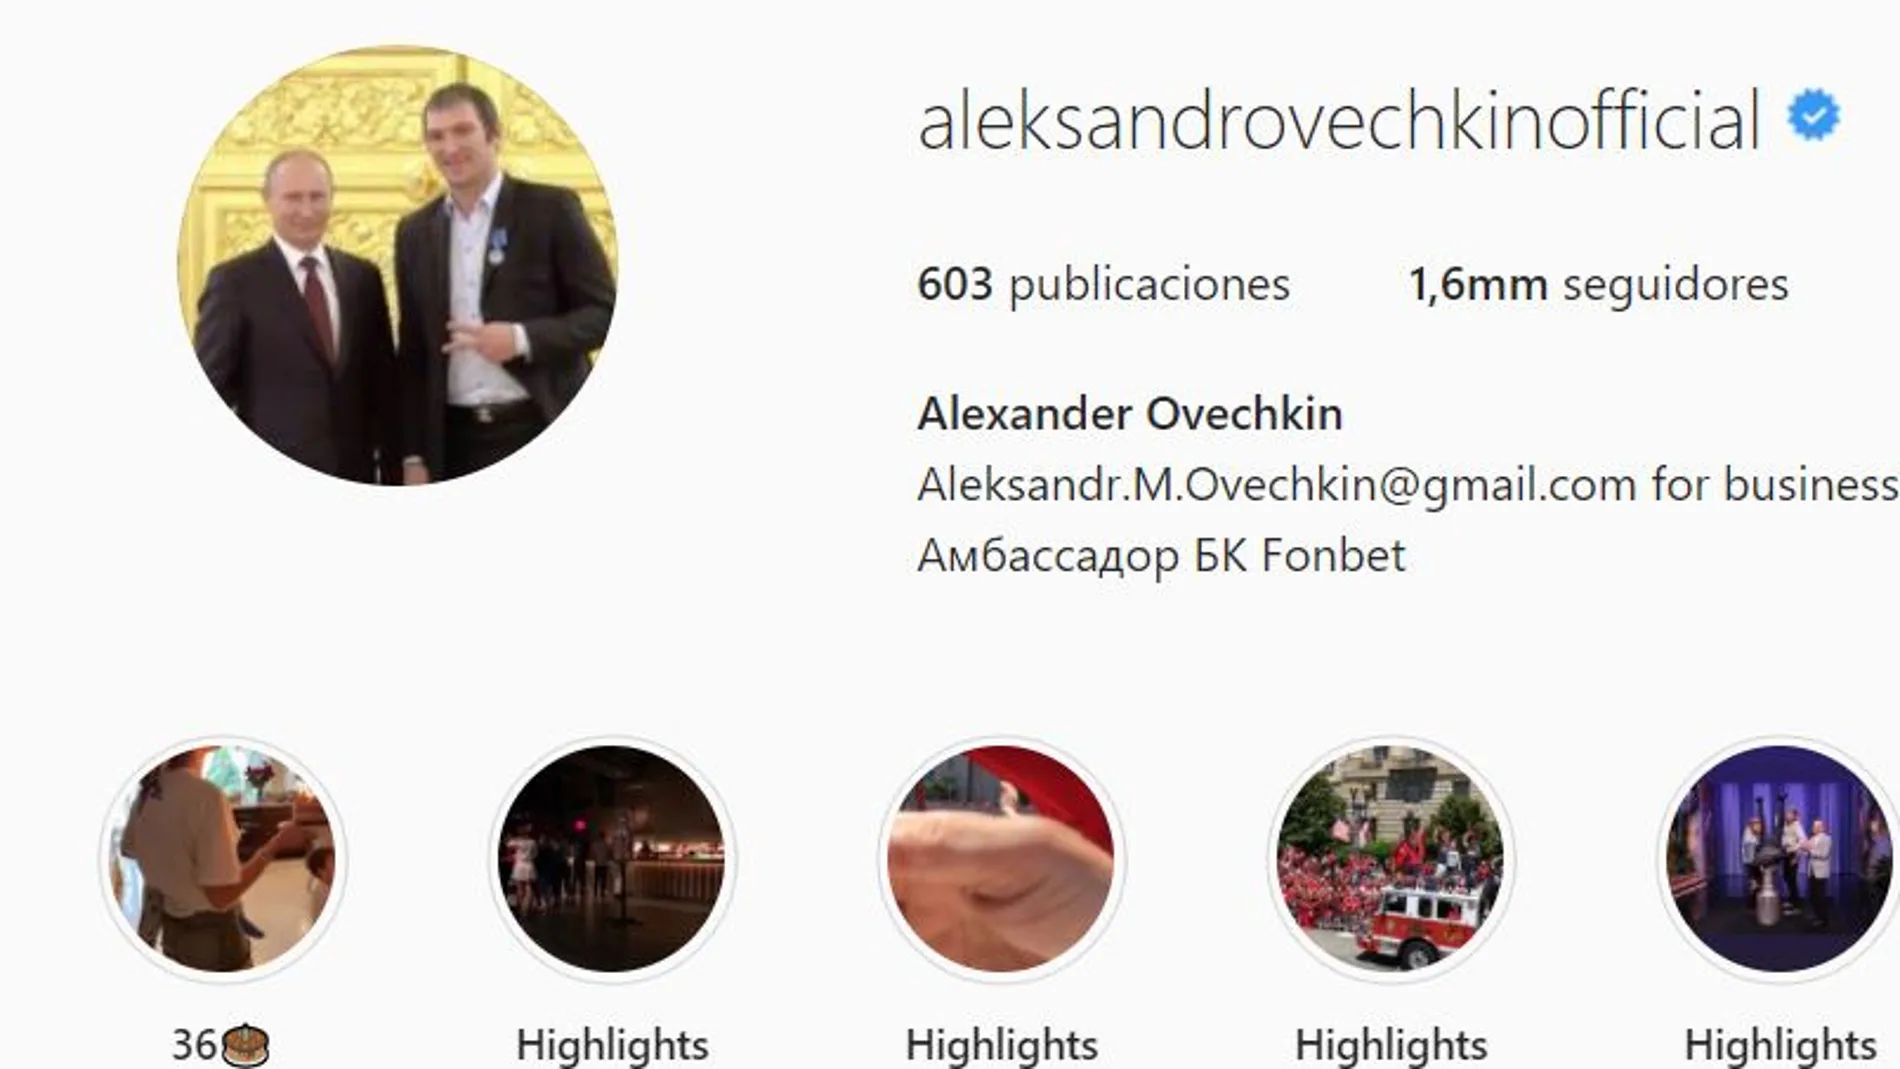 Aleksandr Ovechkin junto a Putin en su perfil de Instagram